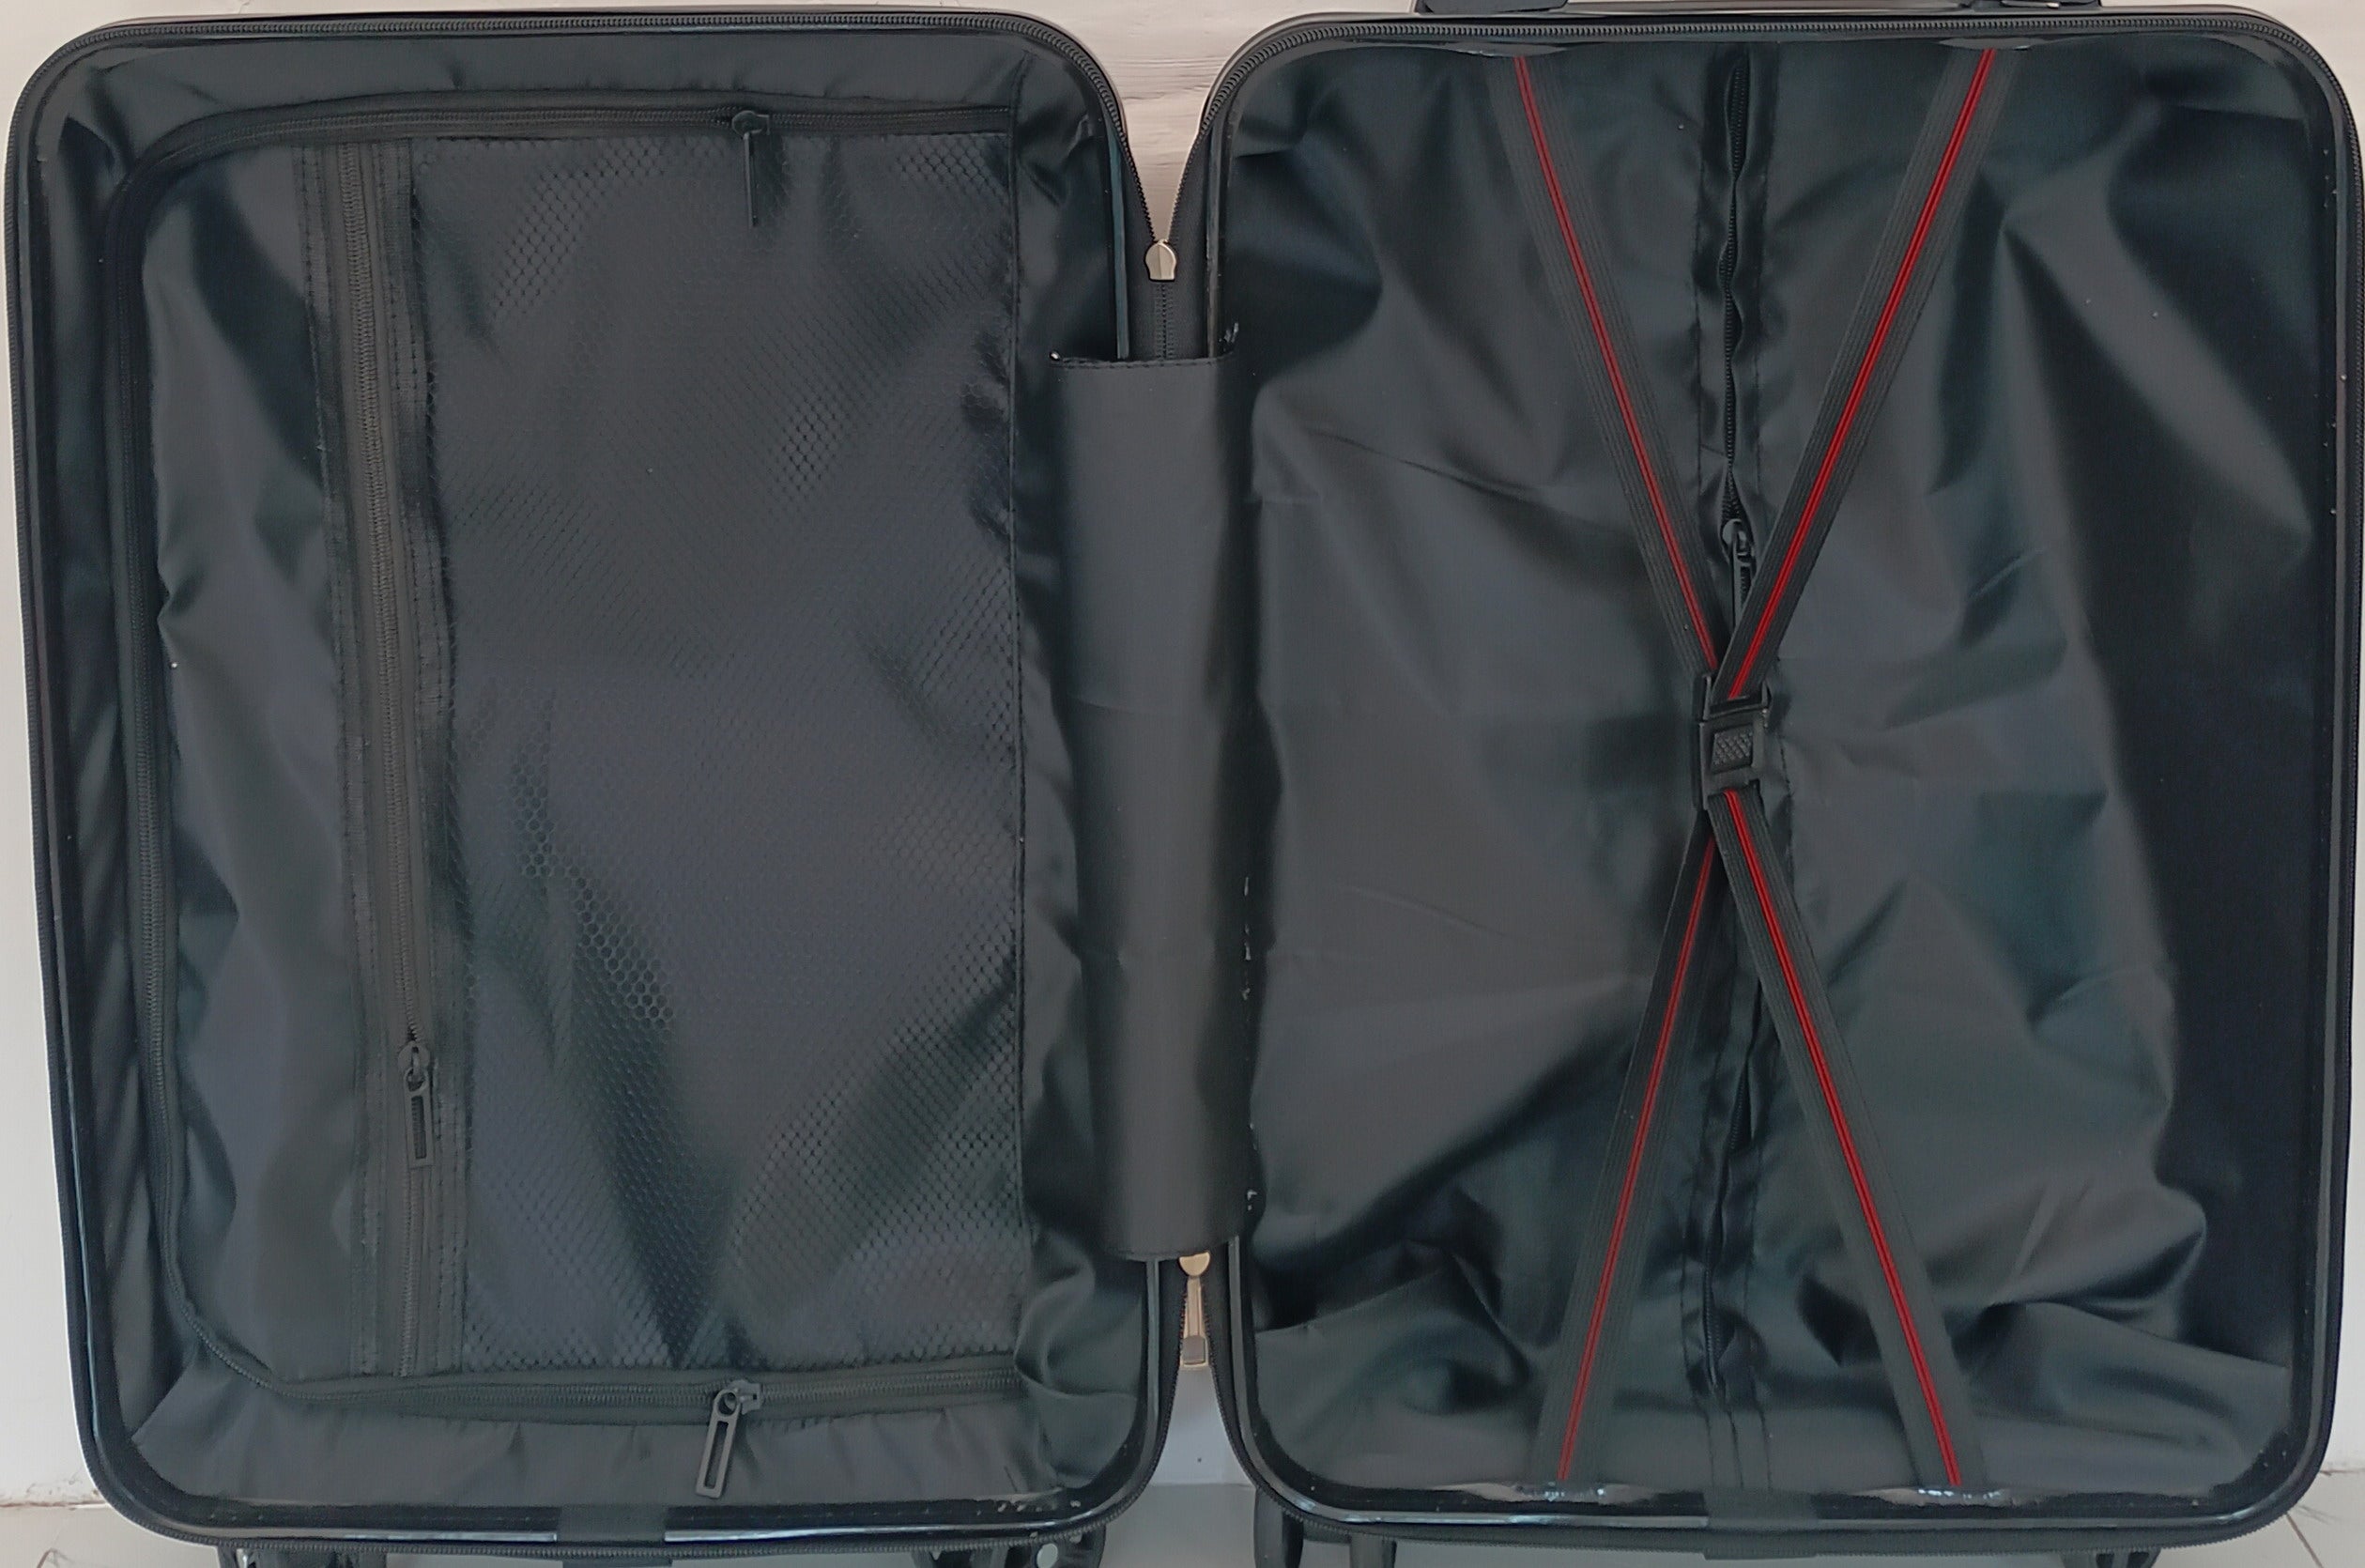 Avengers - 20in MAR095 retro onboard suitcase - Black-2